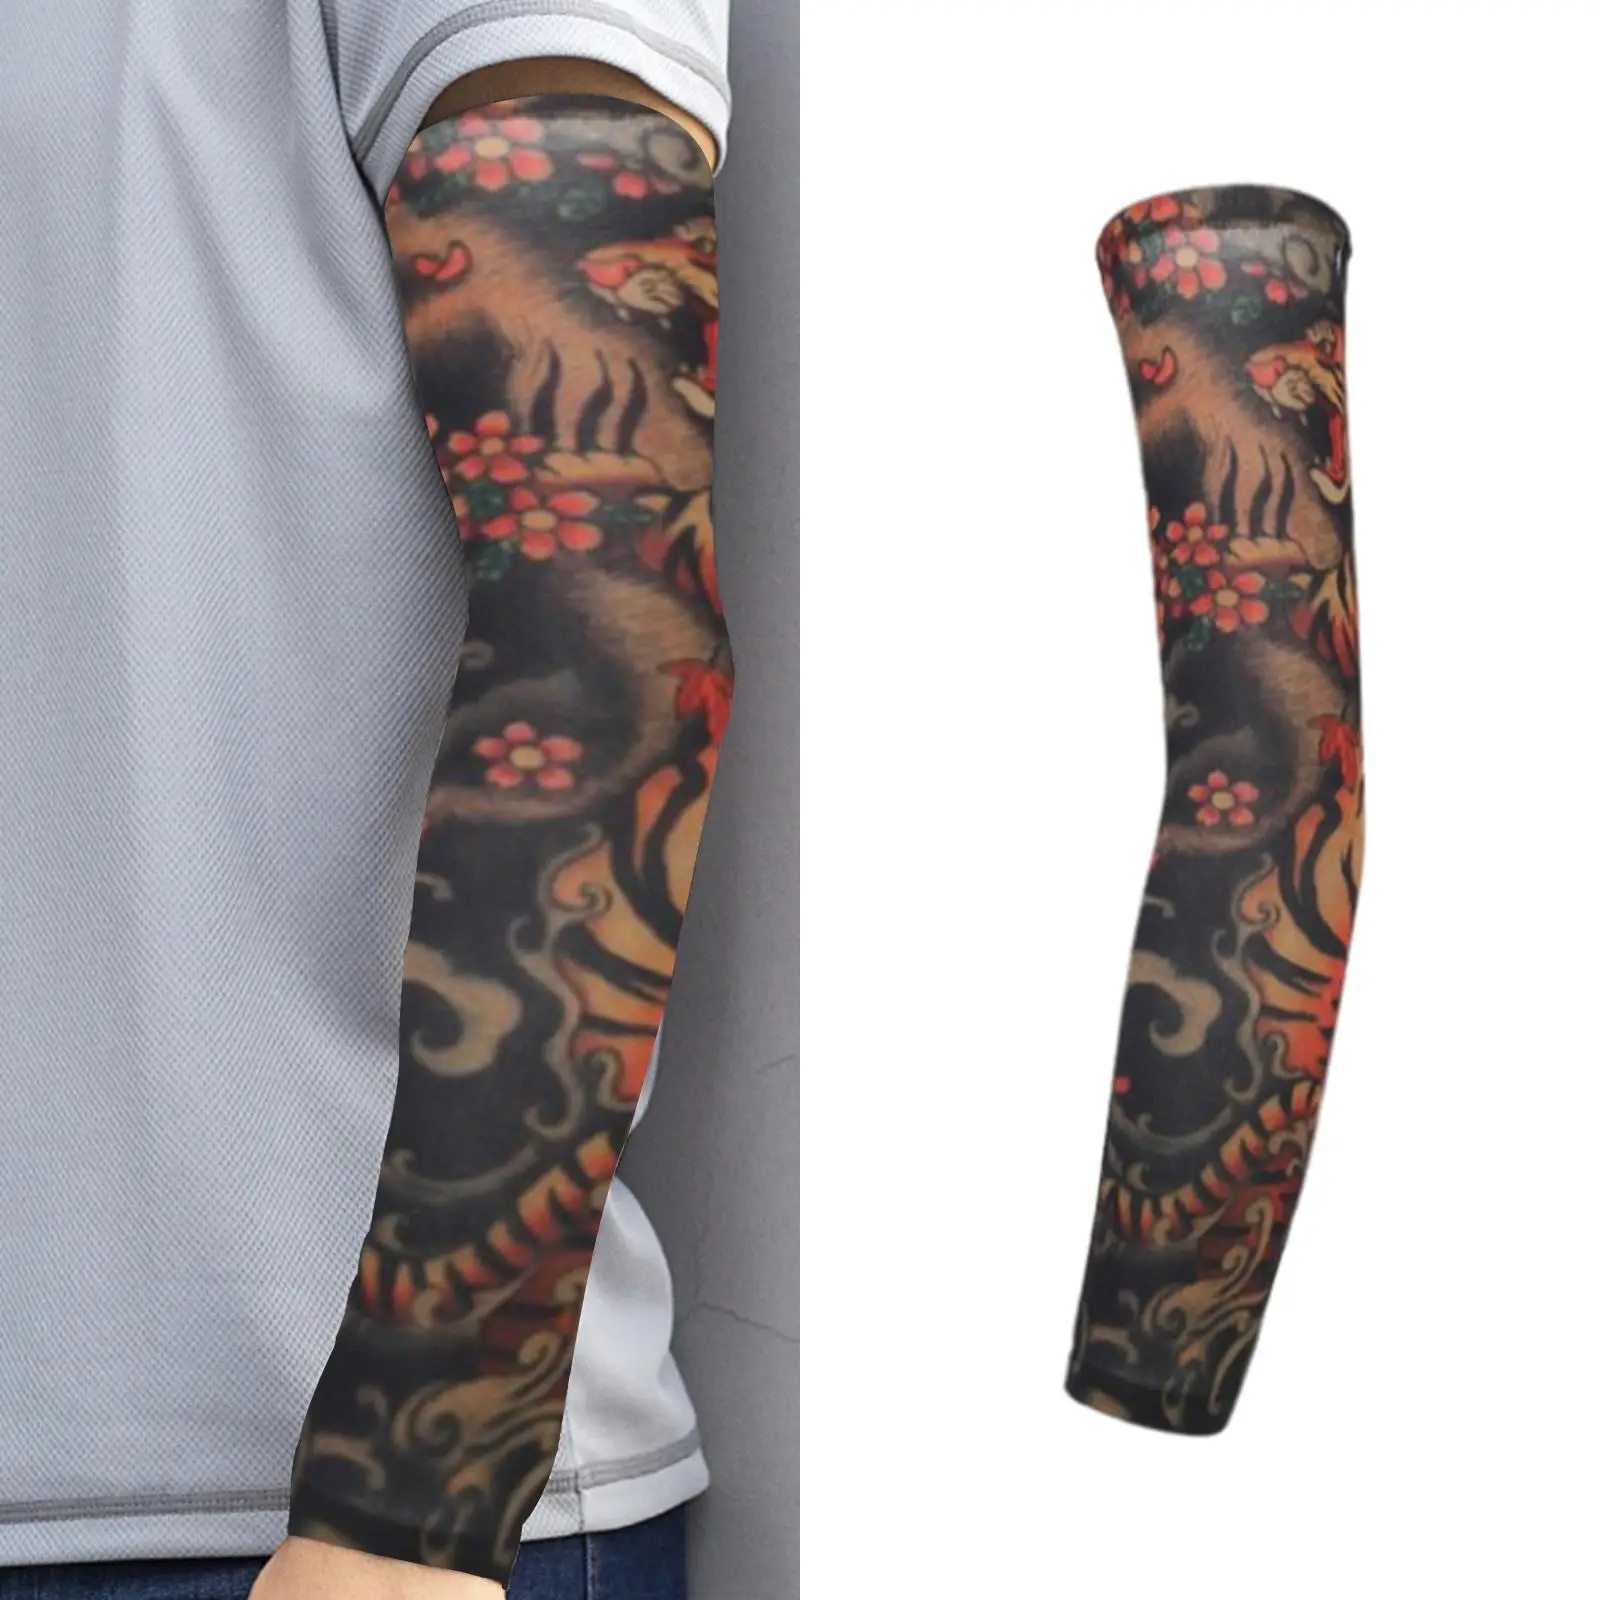 1x Arm Sleeves Sun UV Protection,Arm Cover , Seamless Art Arm Stockings Tattoo